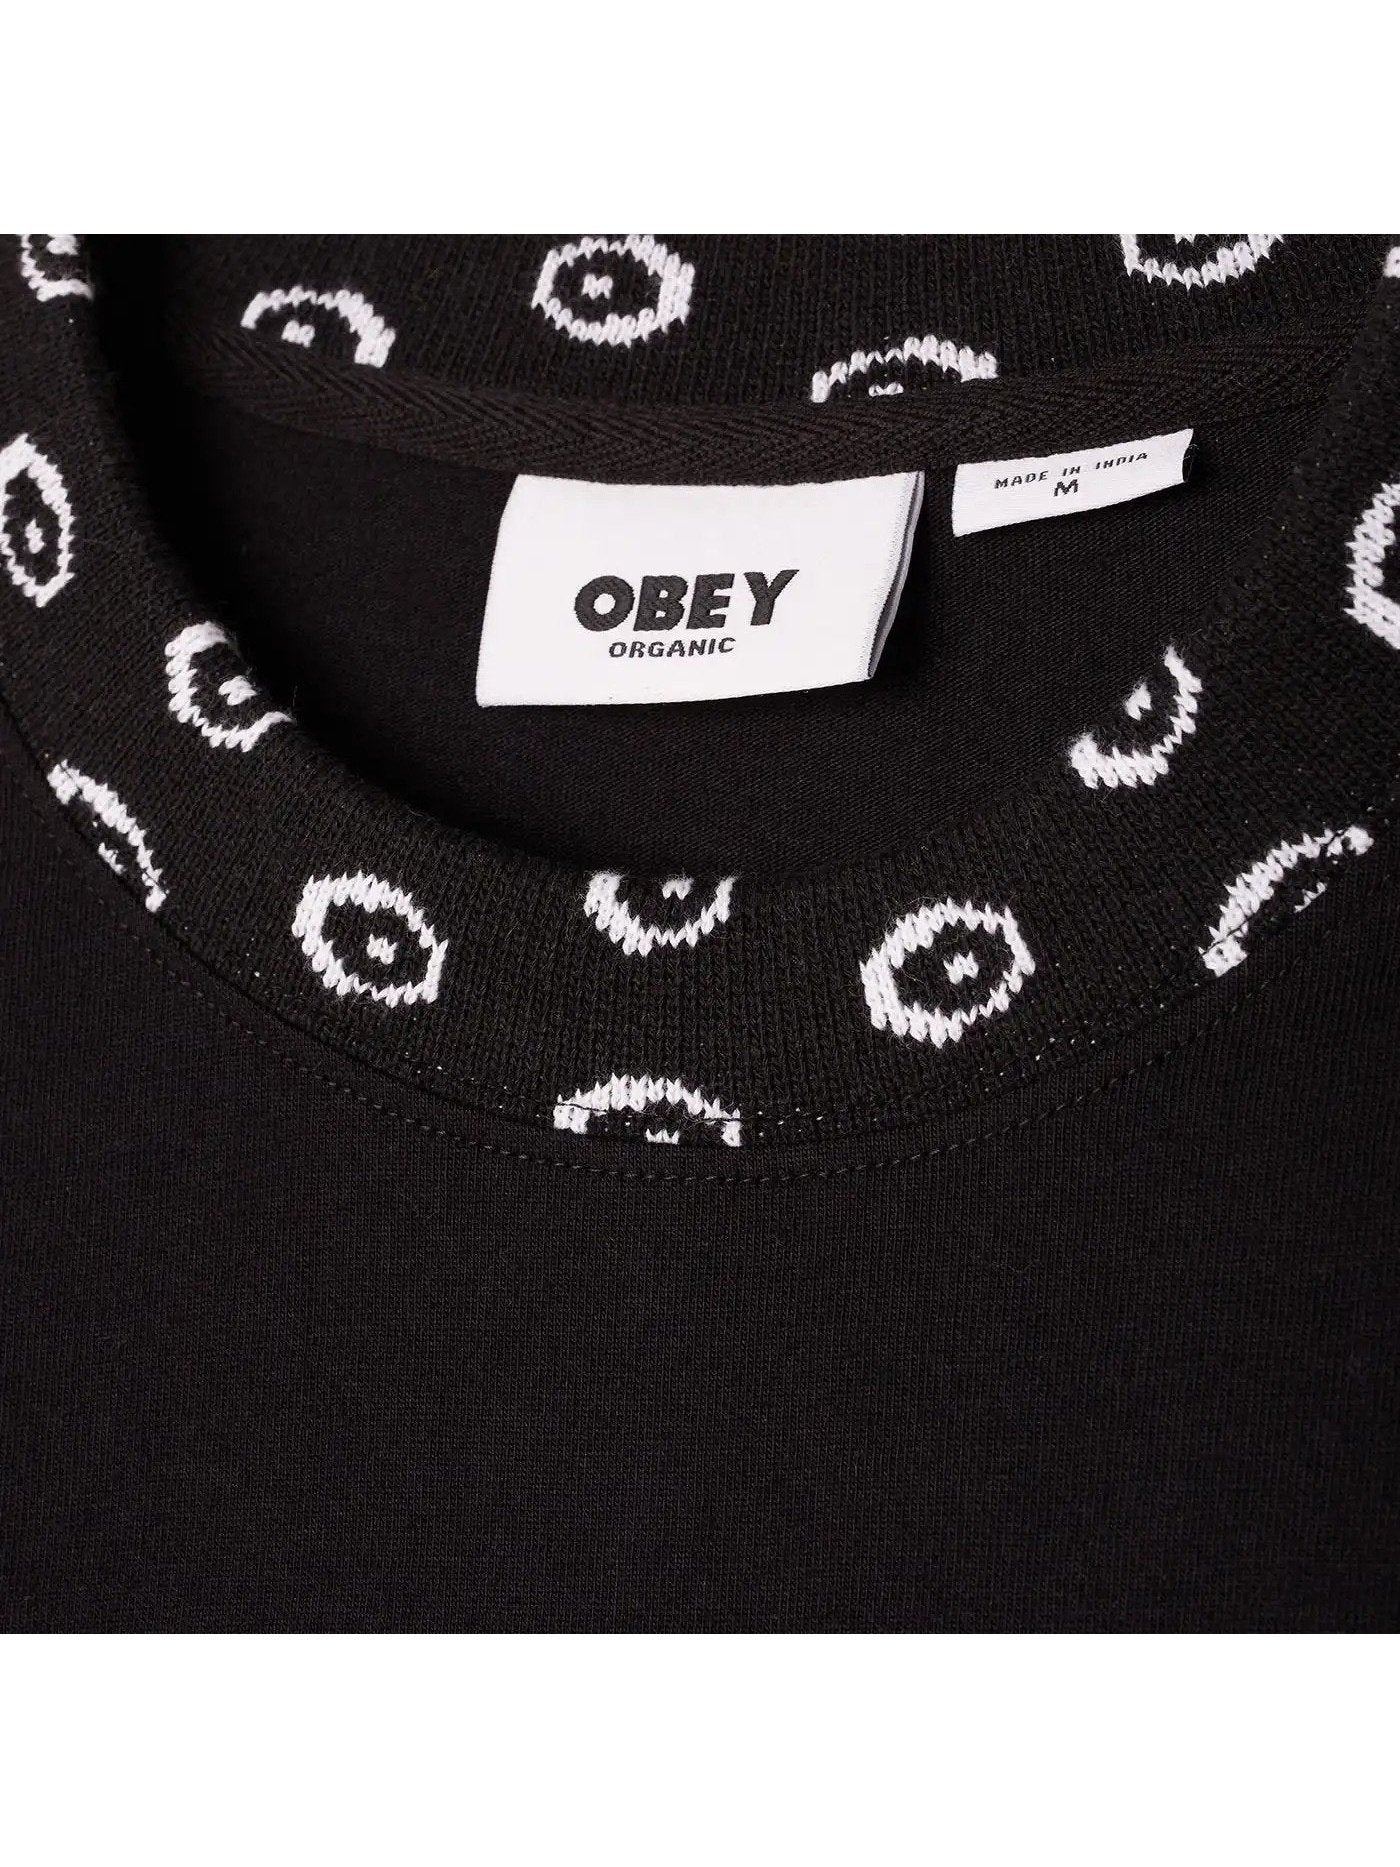 Obey Mens Jacobson Jacquard Long Sleeve T-Shirts Black 131030109.